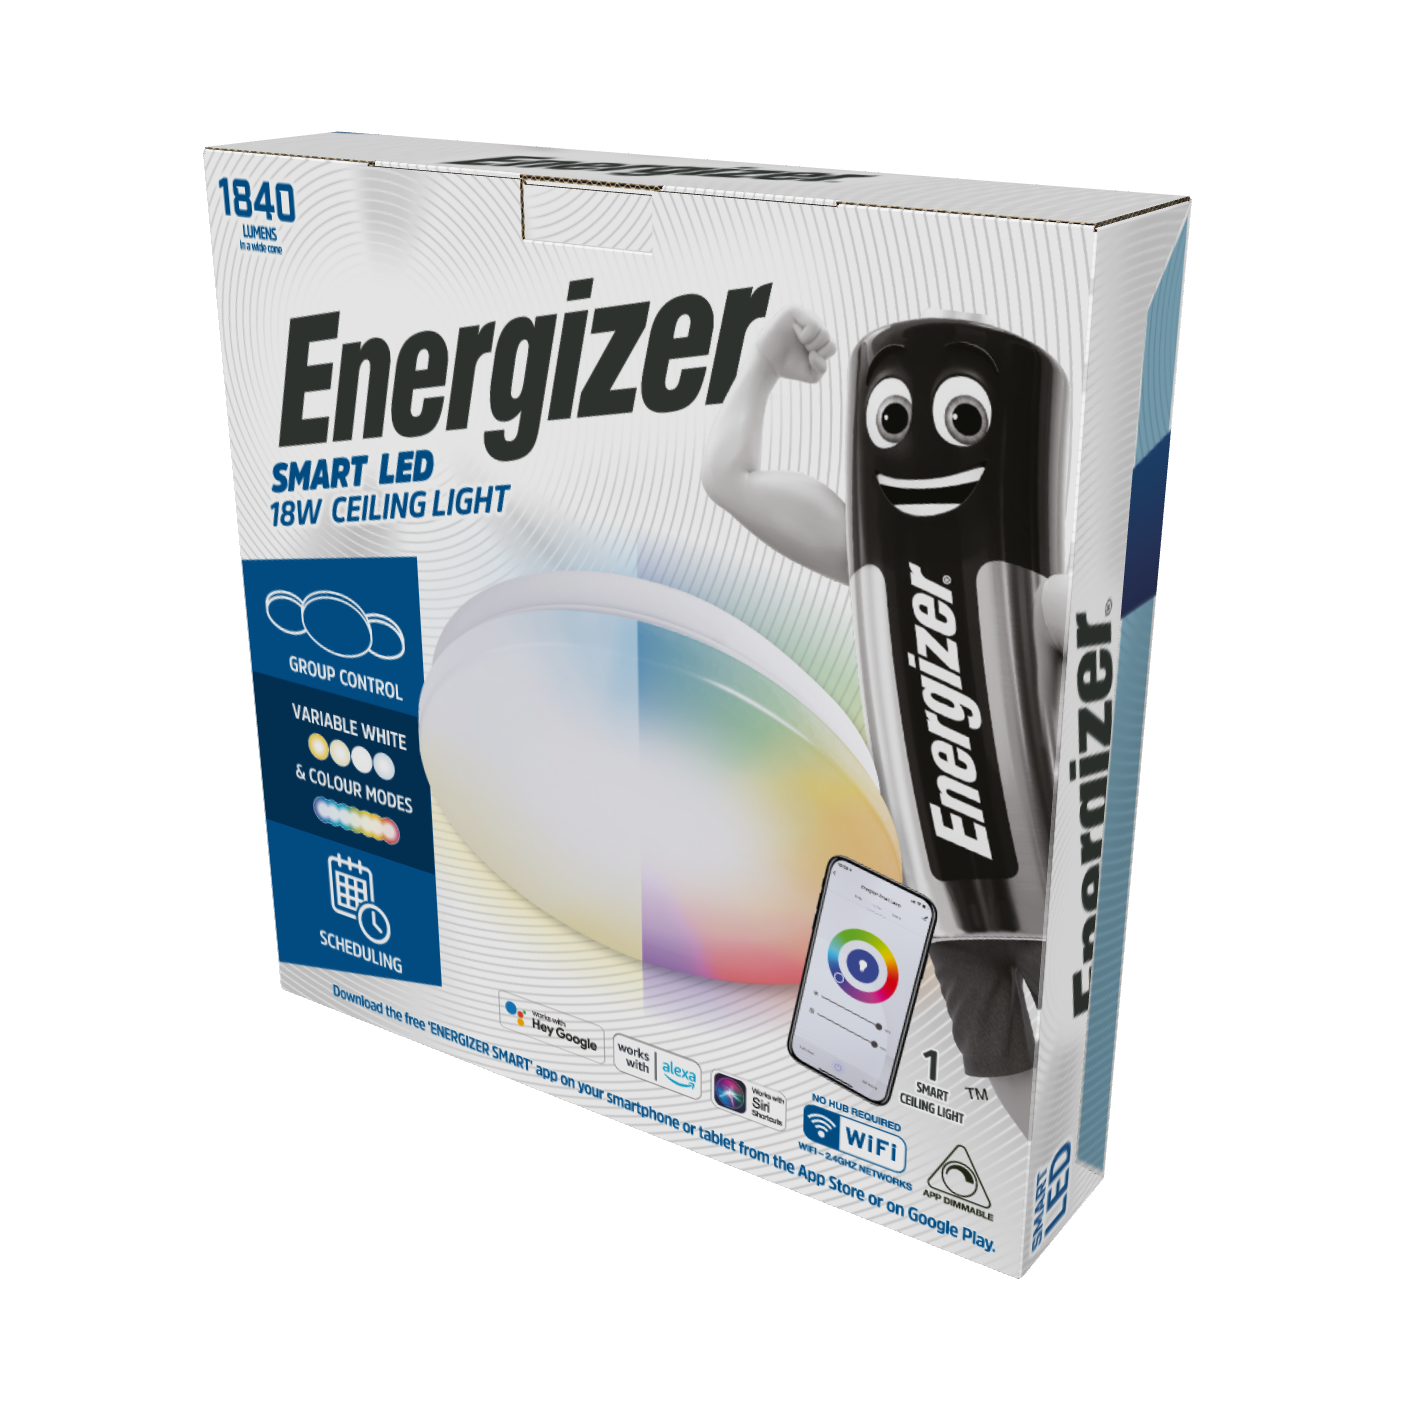 Energizer Smart LED 18W Ceiling Light - Colour changing